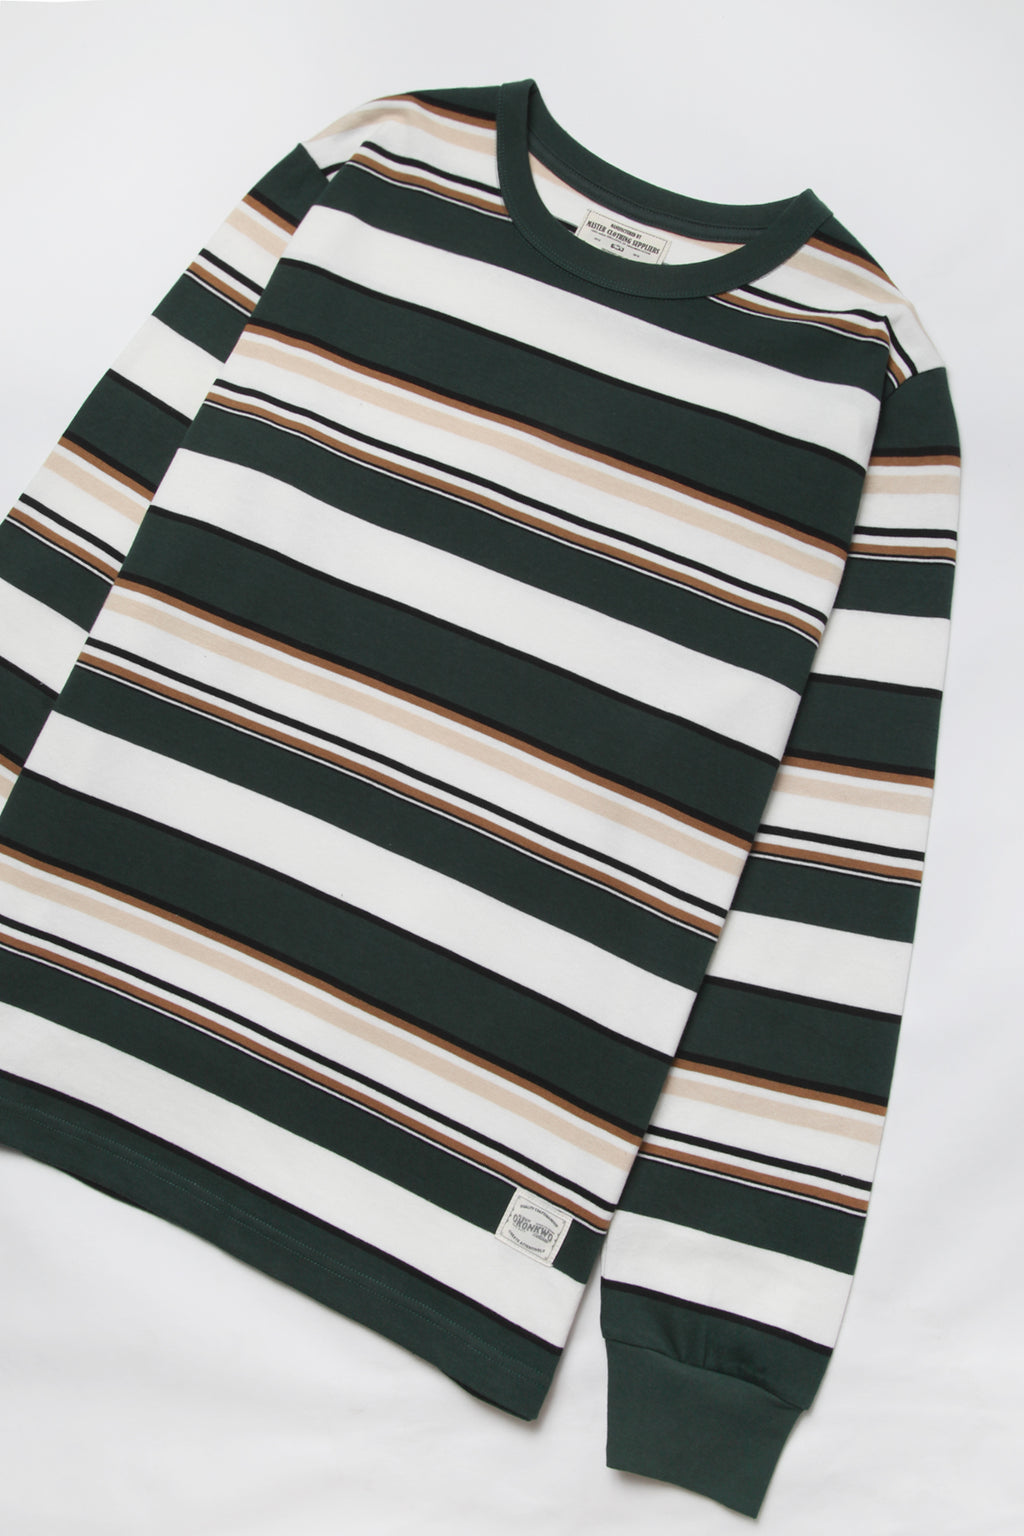 Okonkwo MFG - Long Sleeve Striped Tee - Green/White